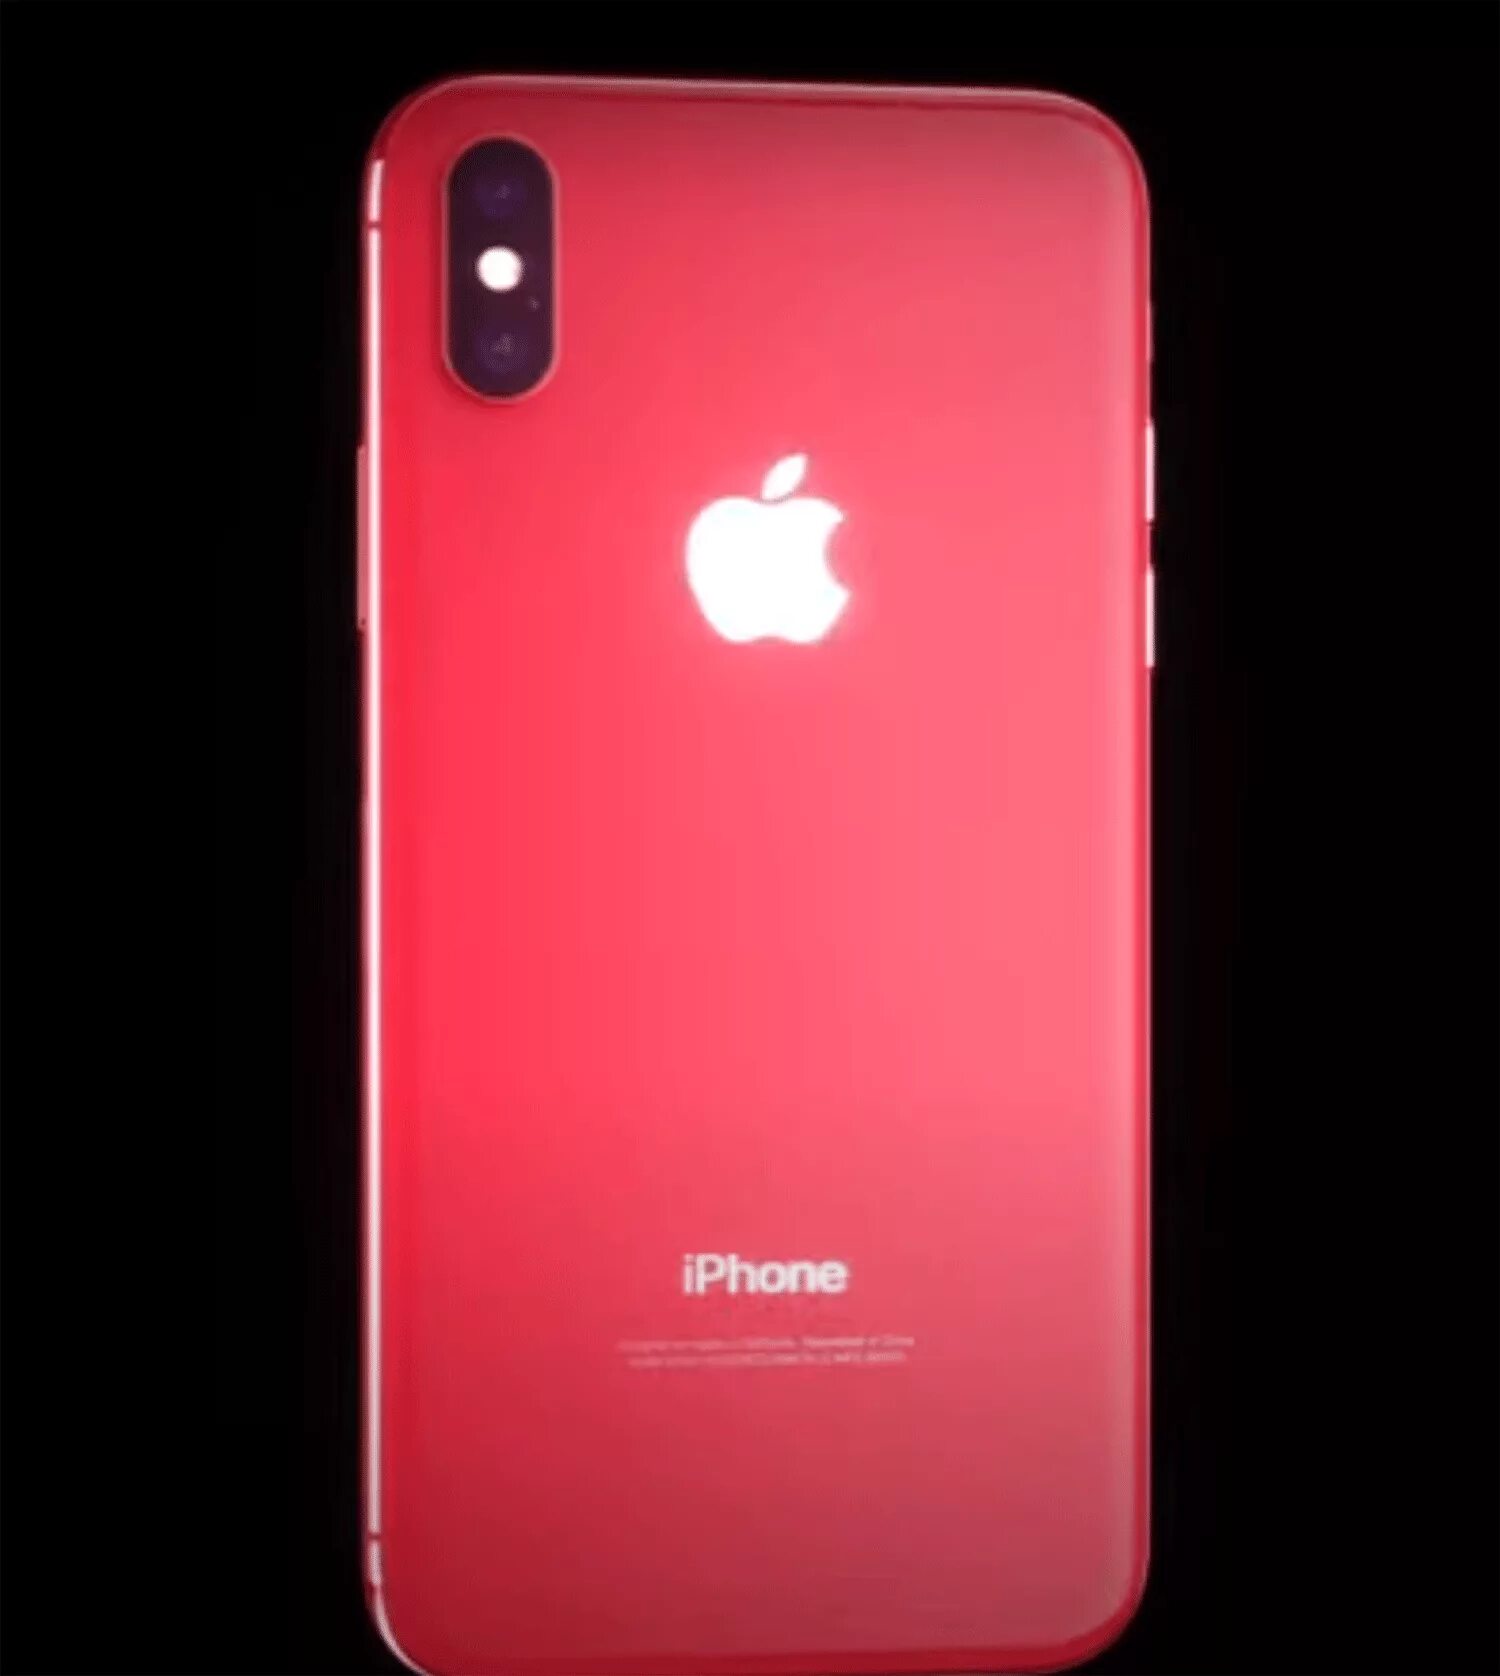 Iphone x Red. Iphone x красный. Apple iphone 10 красный. Красный айфон. Айфон x7